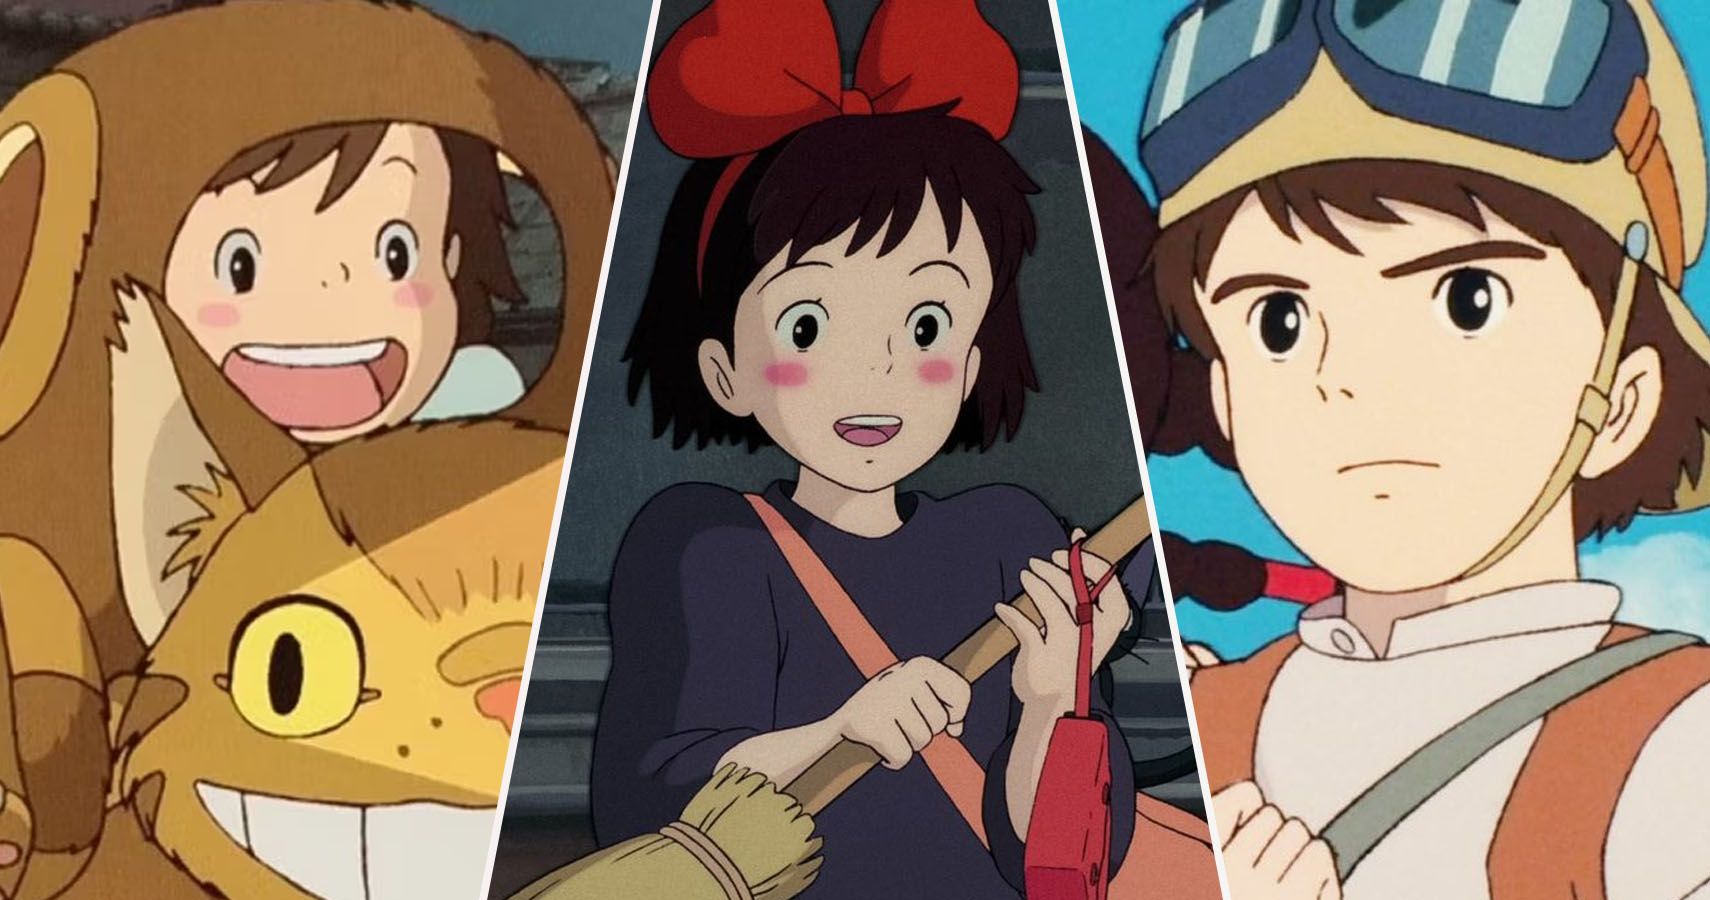 Main characters from Studio Ghibli movies